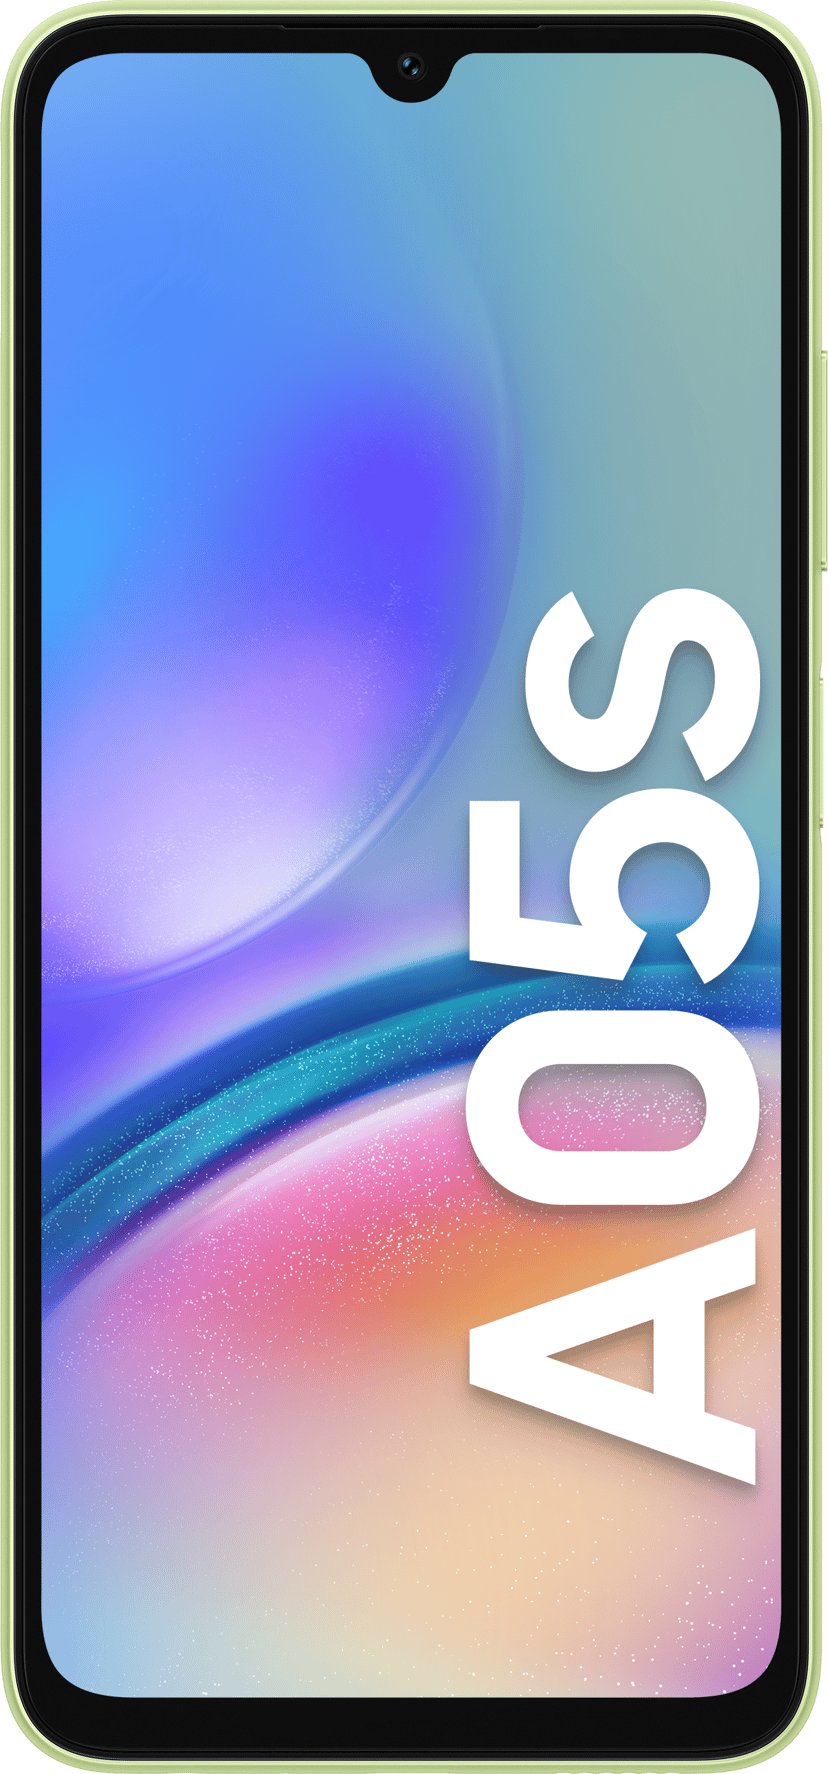 Samsung Galaxy A05s 64GB Vaaleanvihreä